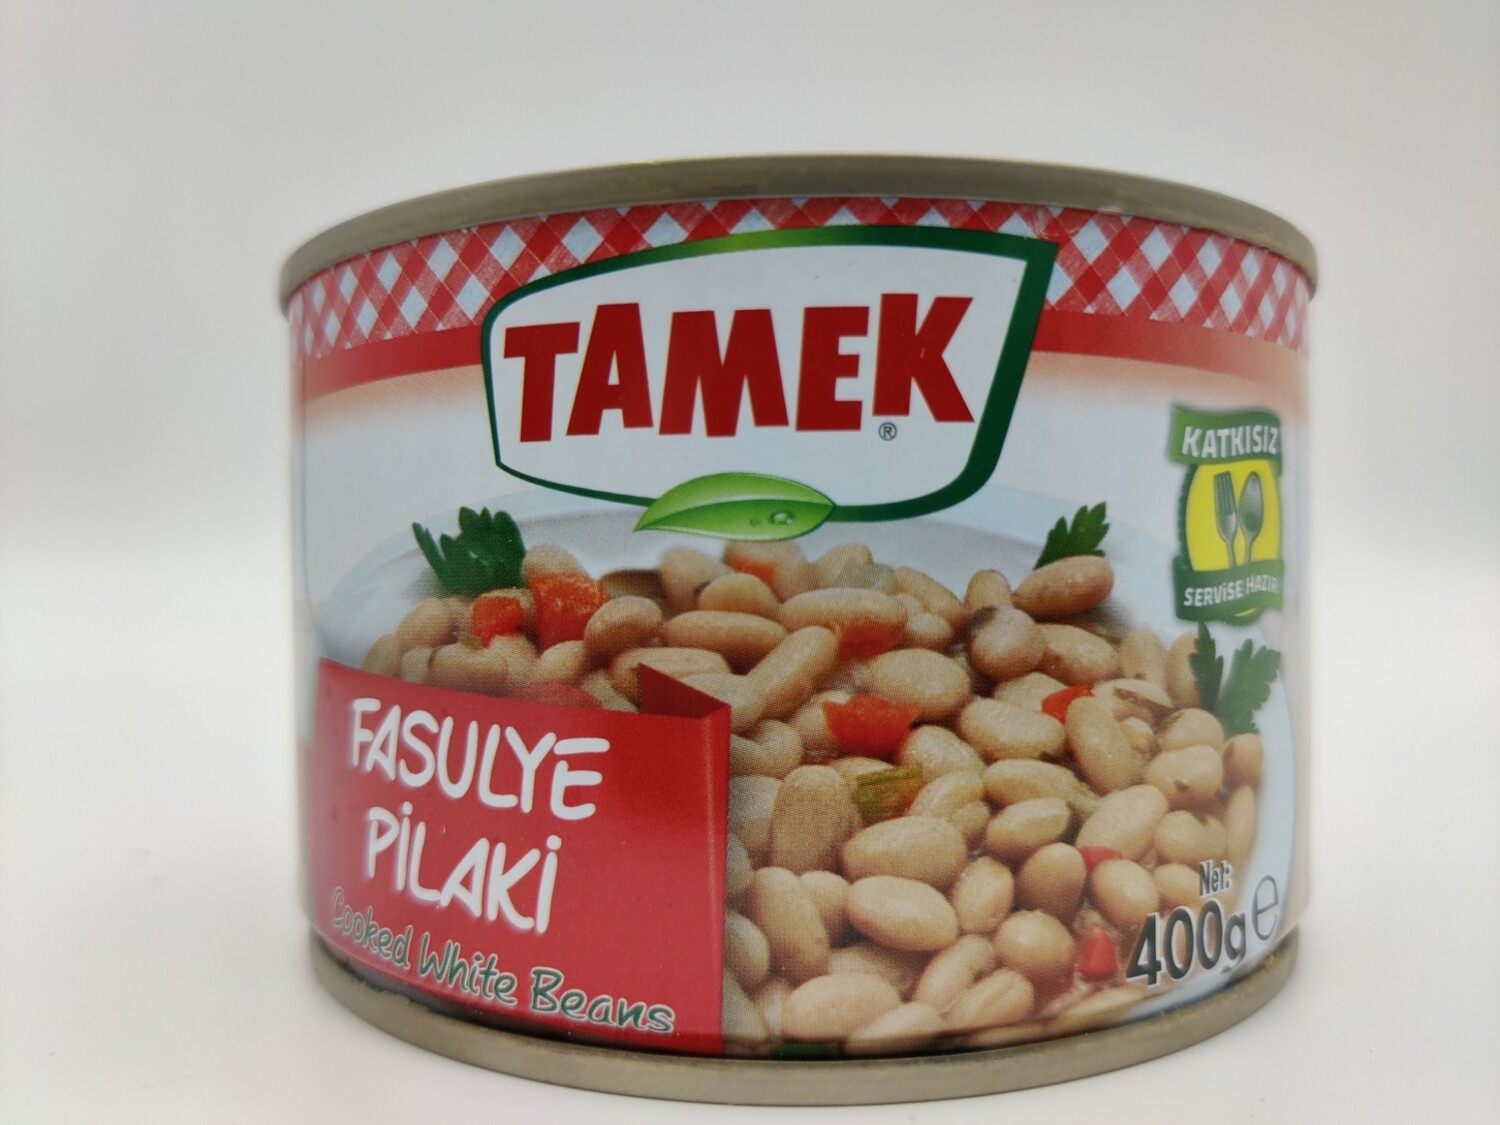 TAMEK Cooked White Beans 400g Can Fasulye Pilaki